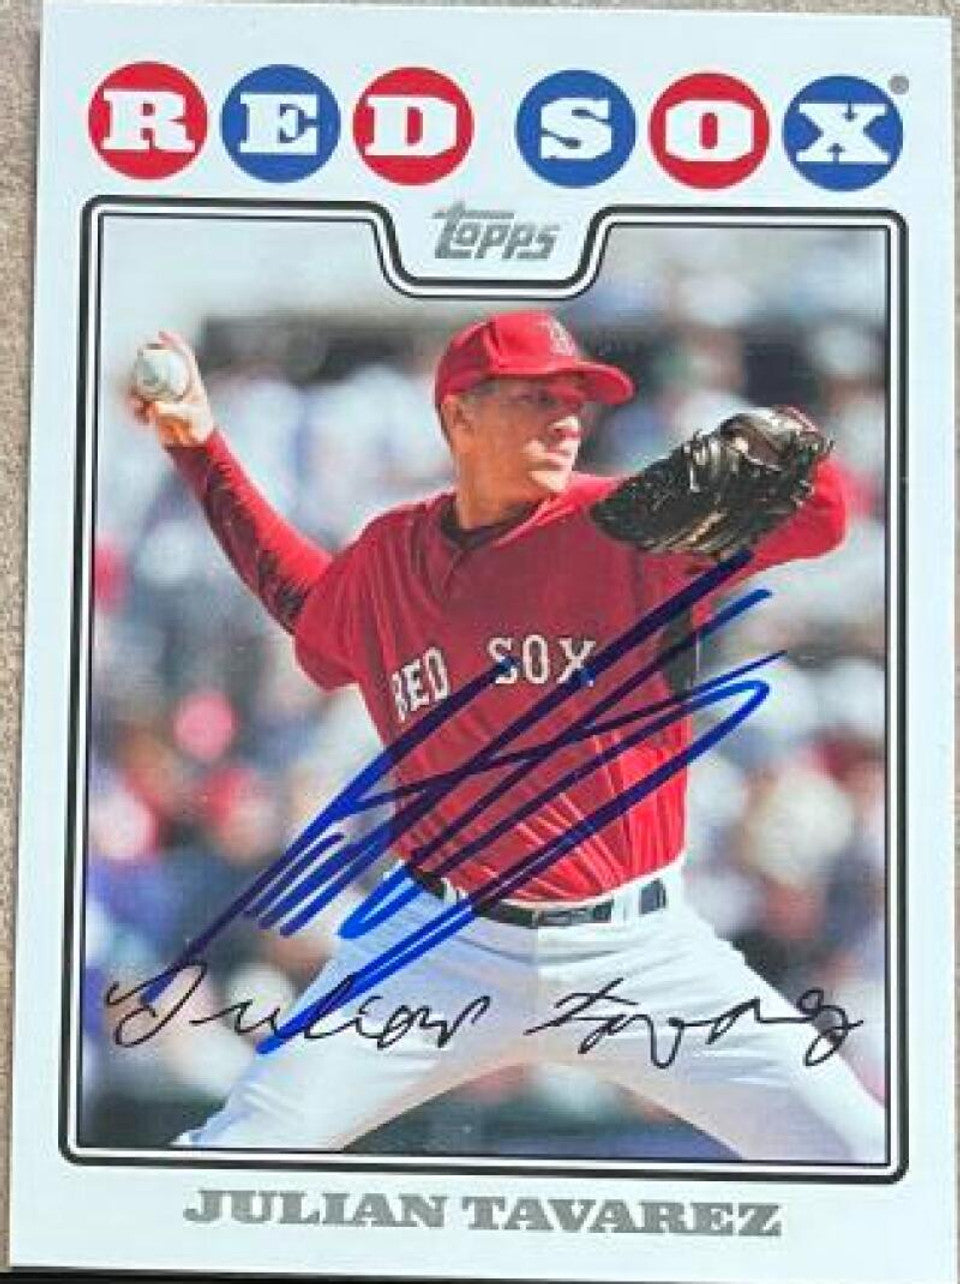 Julian Tavarez Signed 2008 Topps Baseball Card - Boston Red Sox